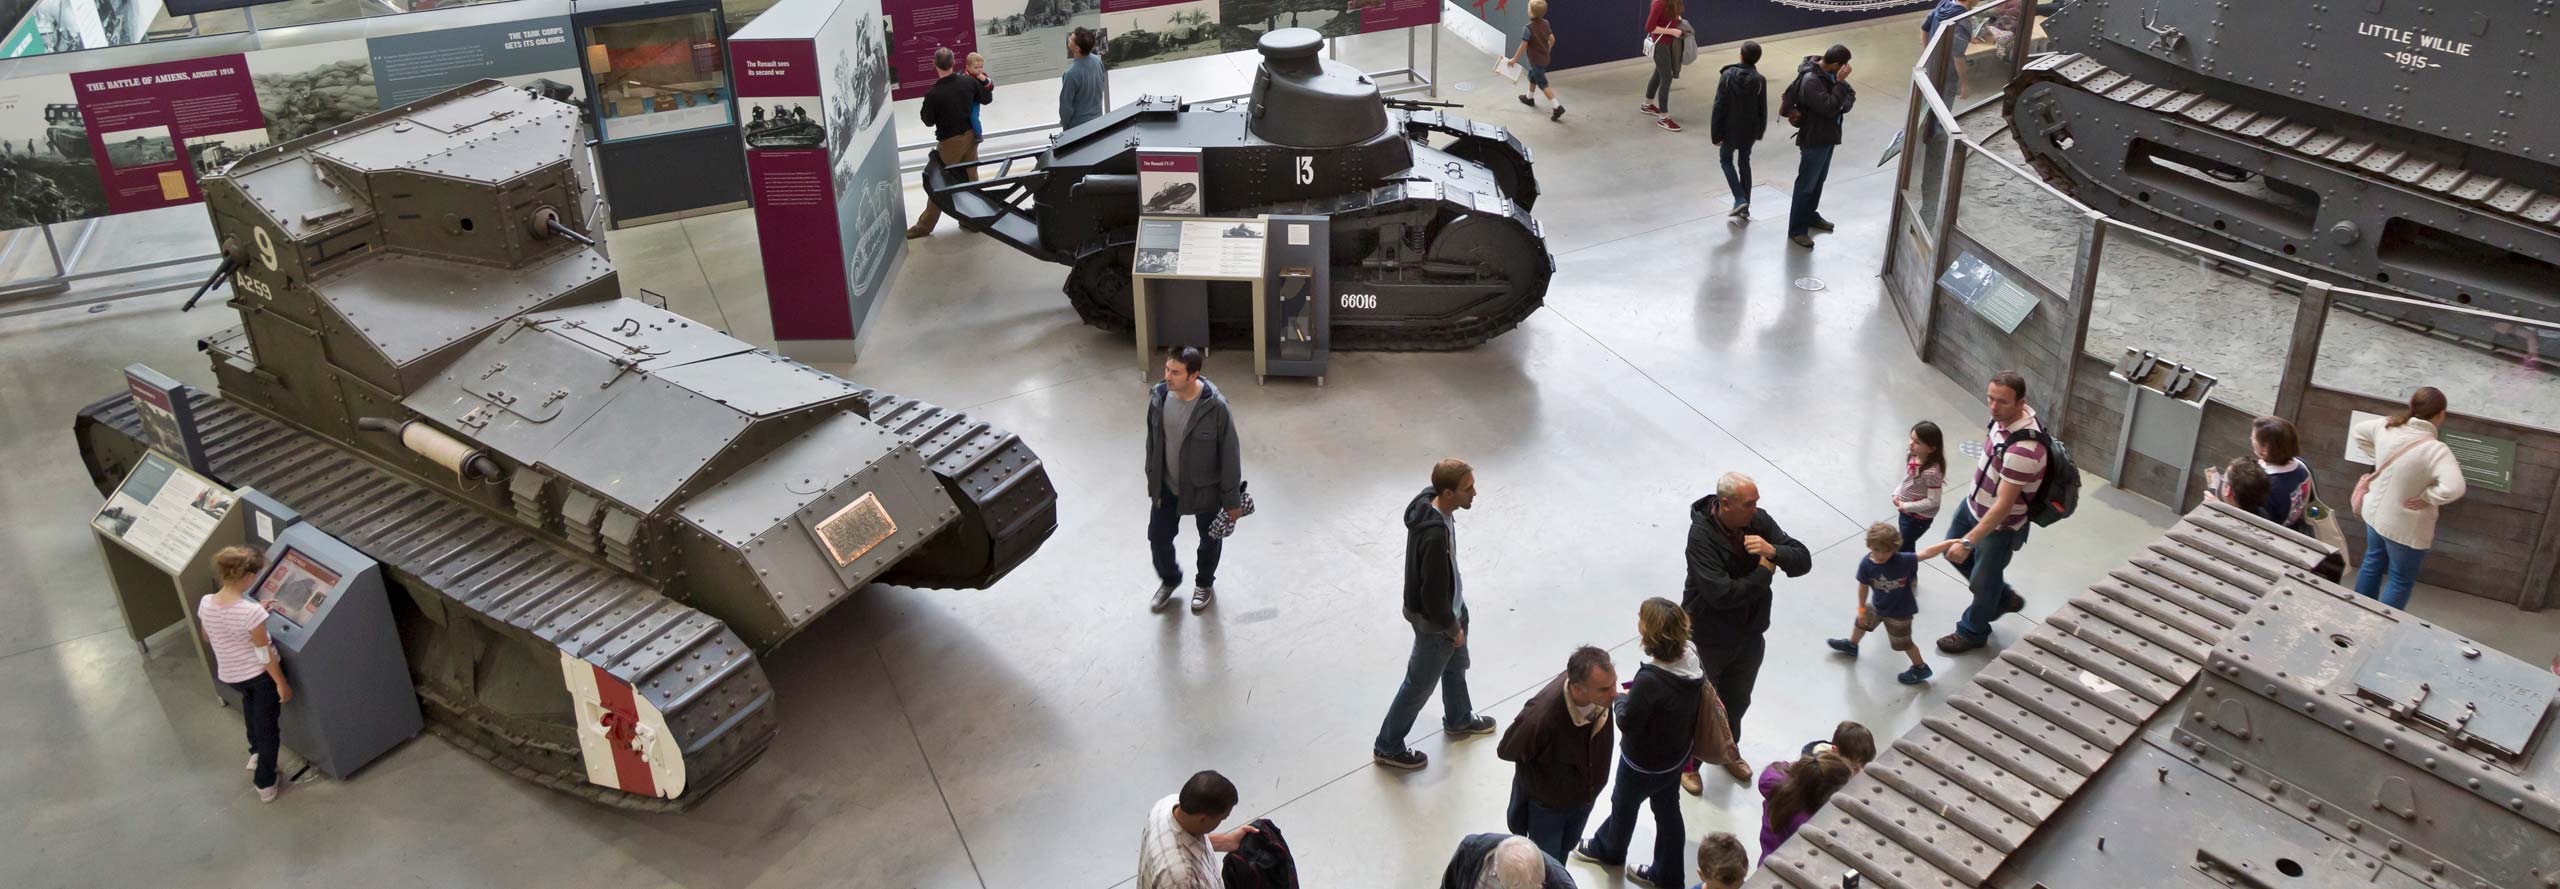 Tank Museum hall